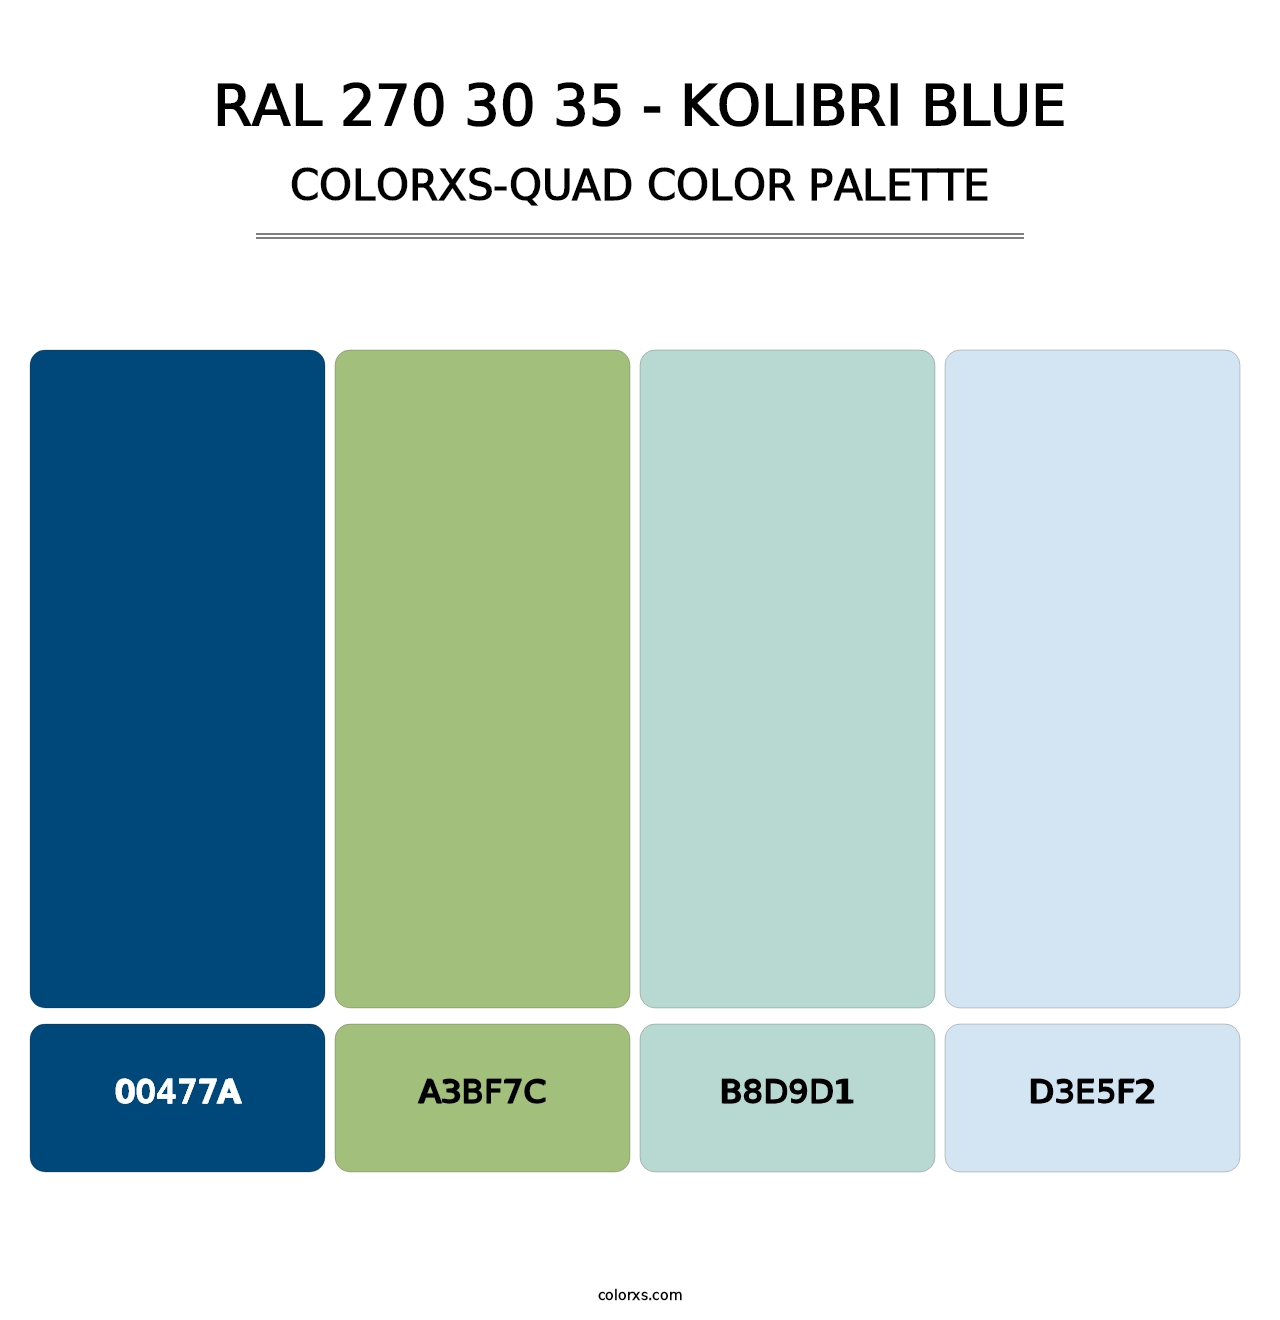 RAL 270 30 35 - Kolibri Blue - Colorxs Quad Palette